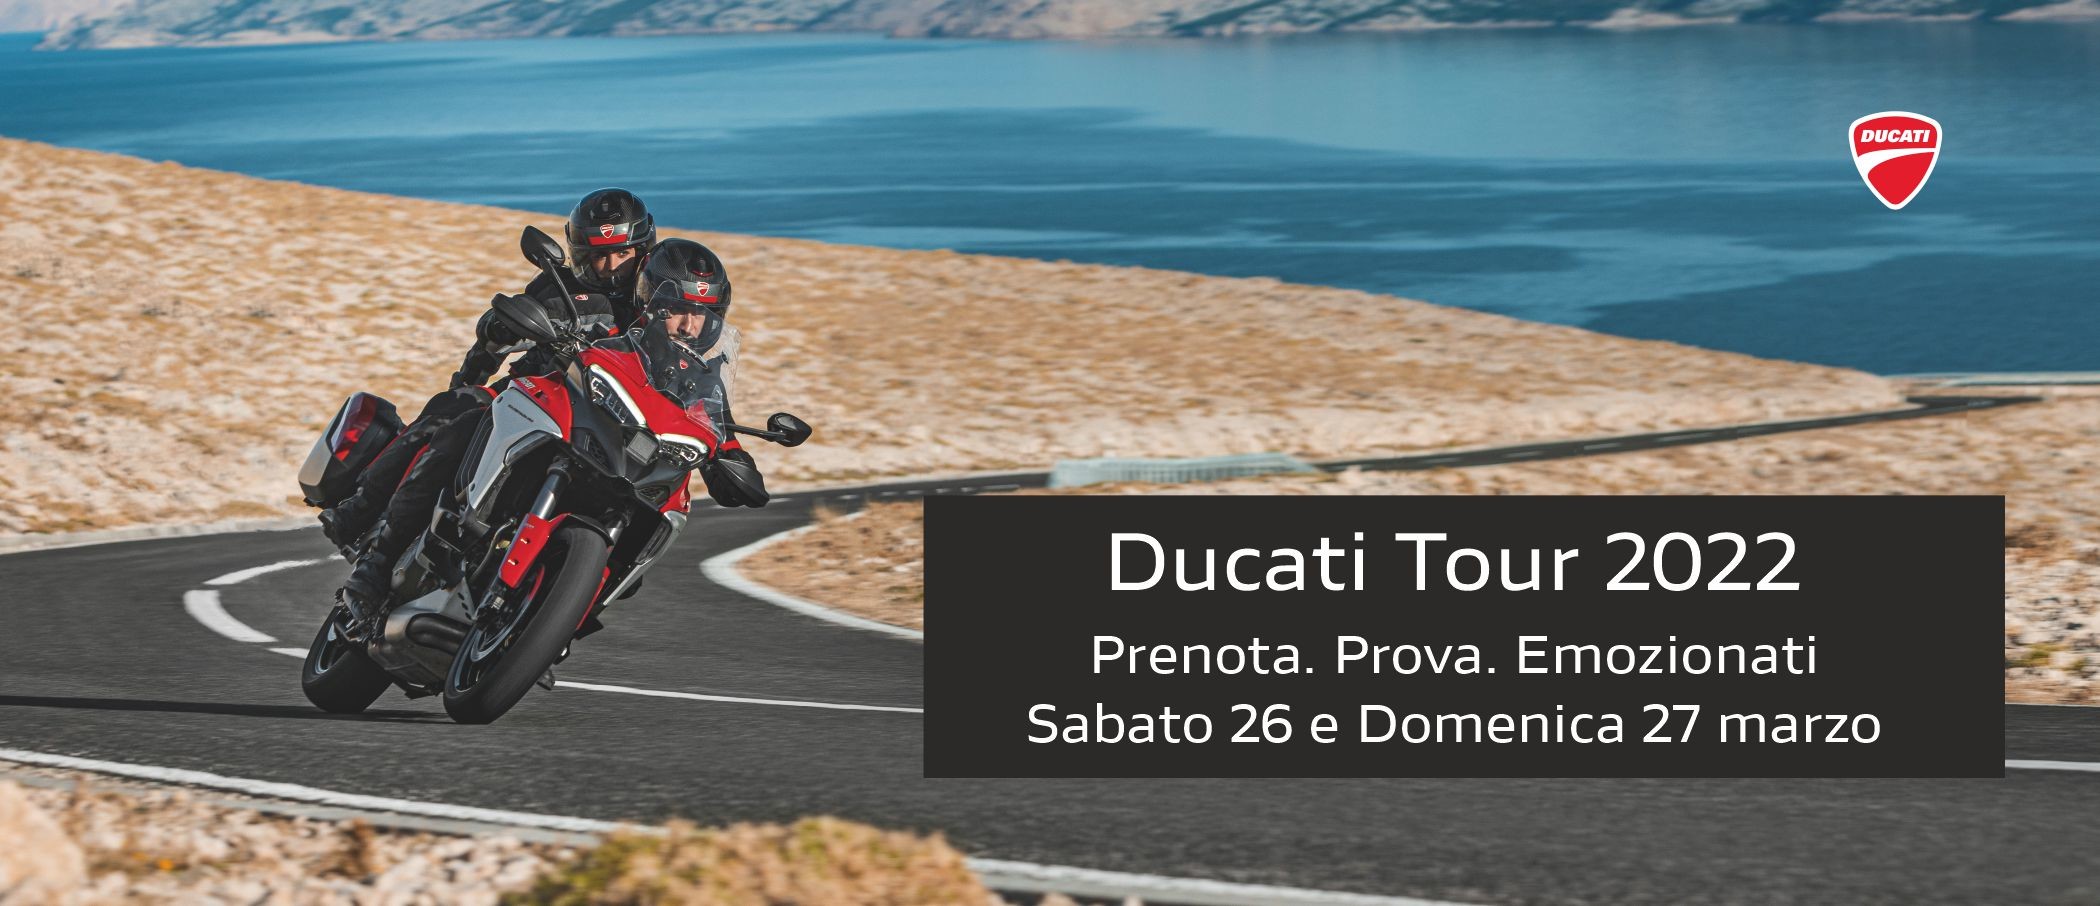 Ducati Tour 2022